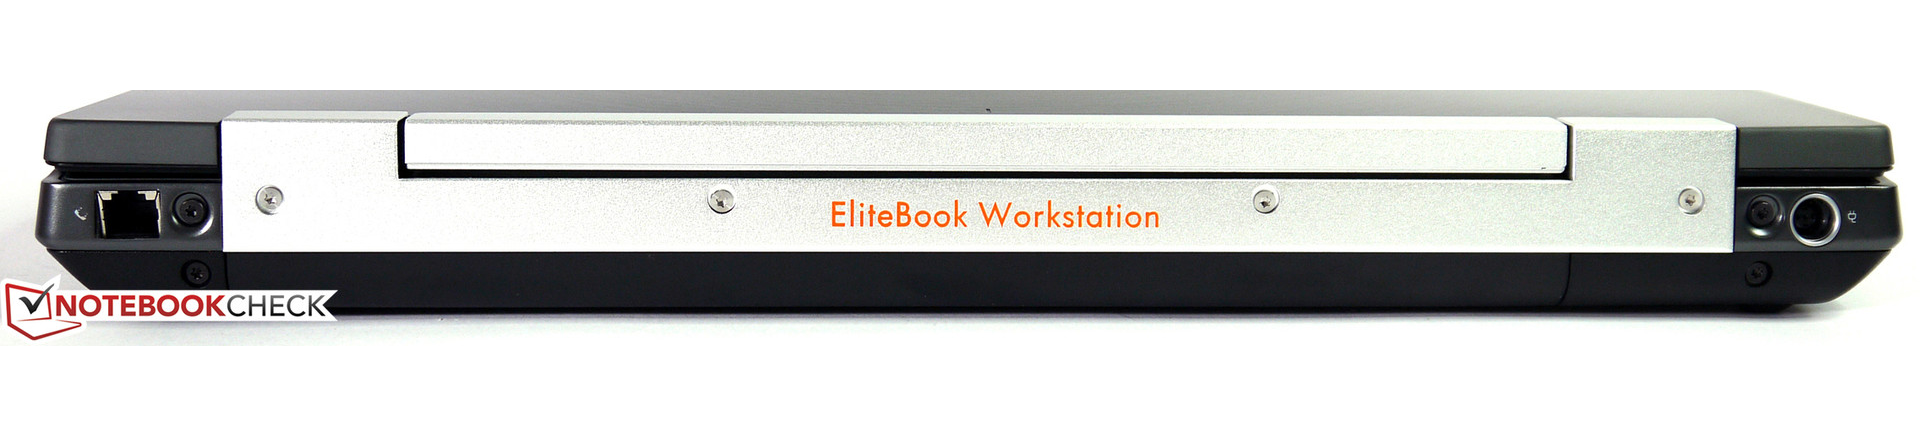 Connectivite 3 Elitebook 8570w